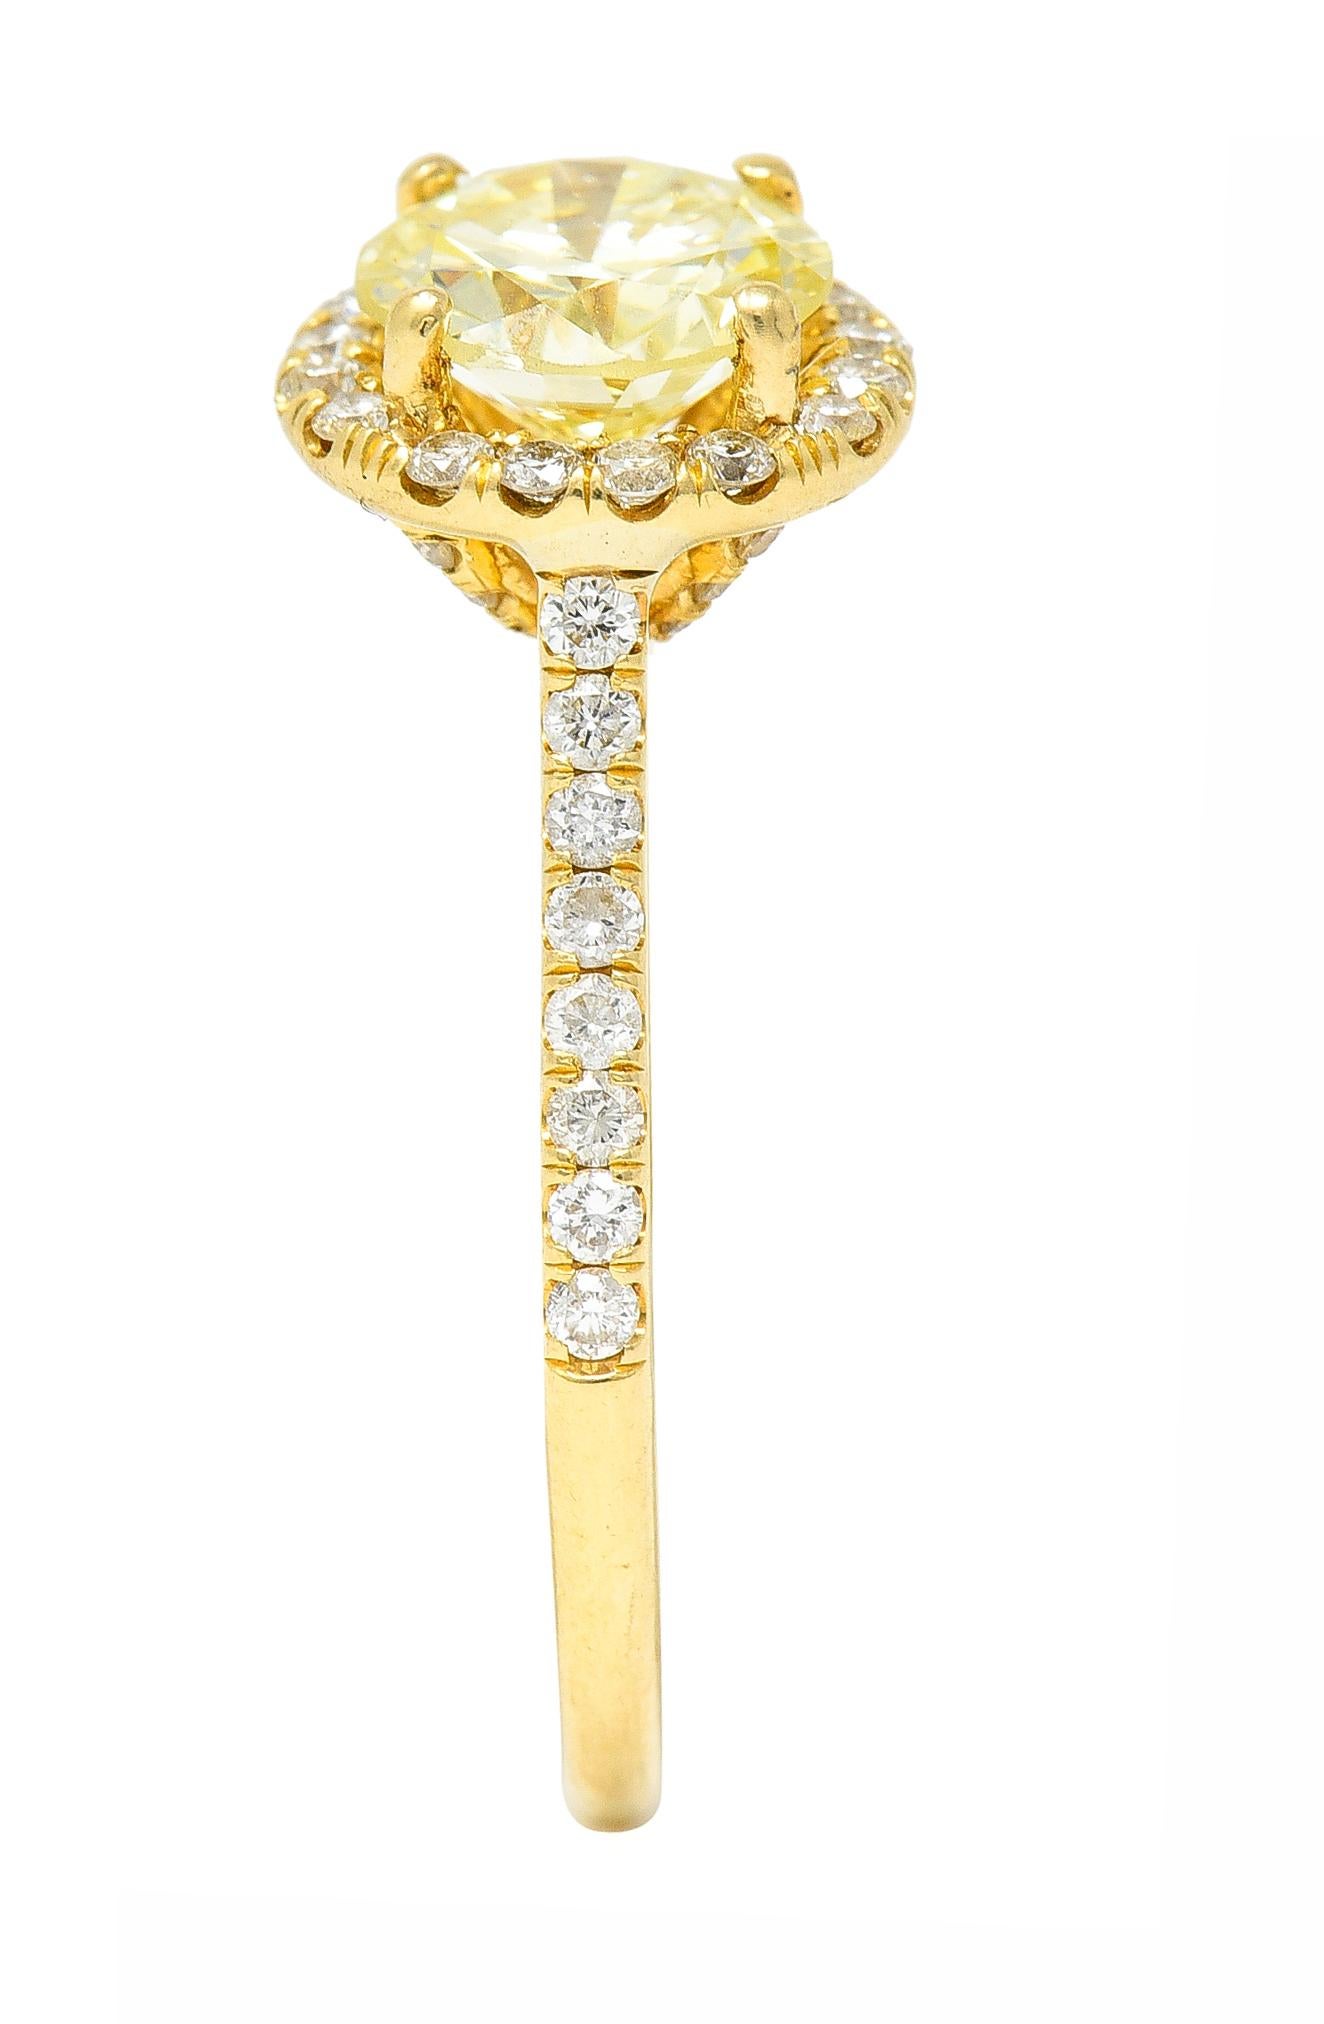 Contemporary 1.65 Carats Fancy Light Yellow Diamond 18 Karat Gold Halo Ring For Sale 6